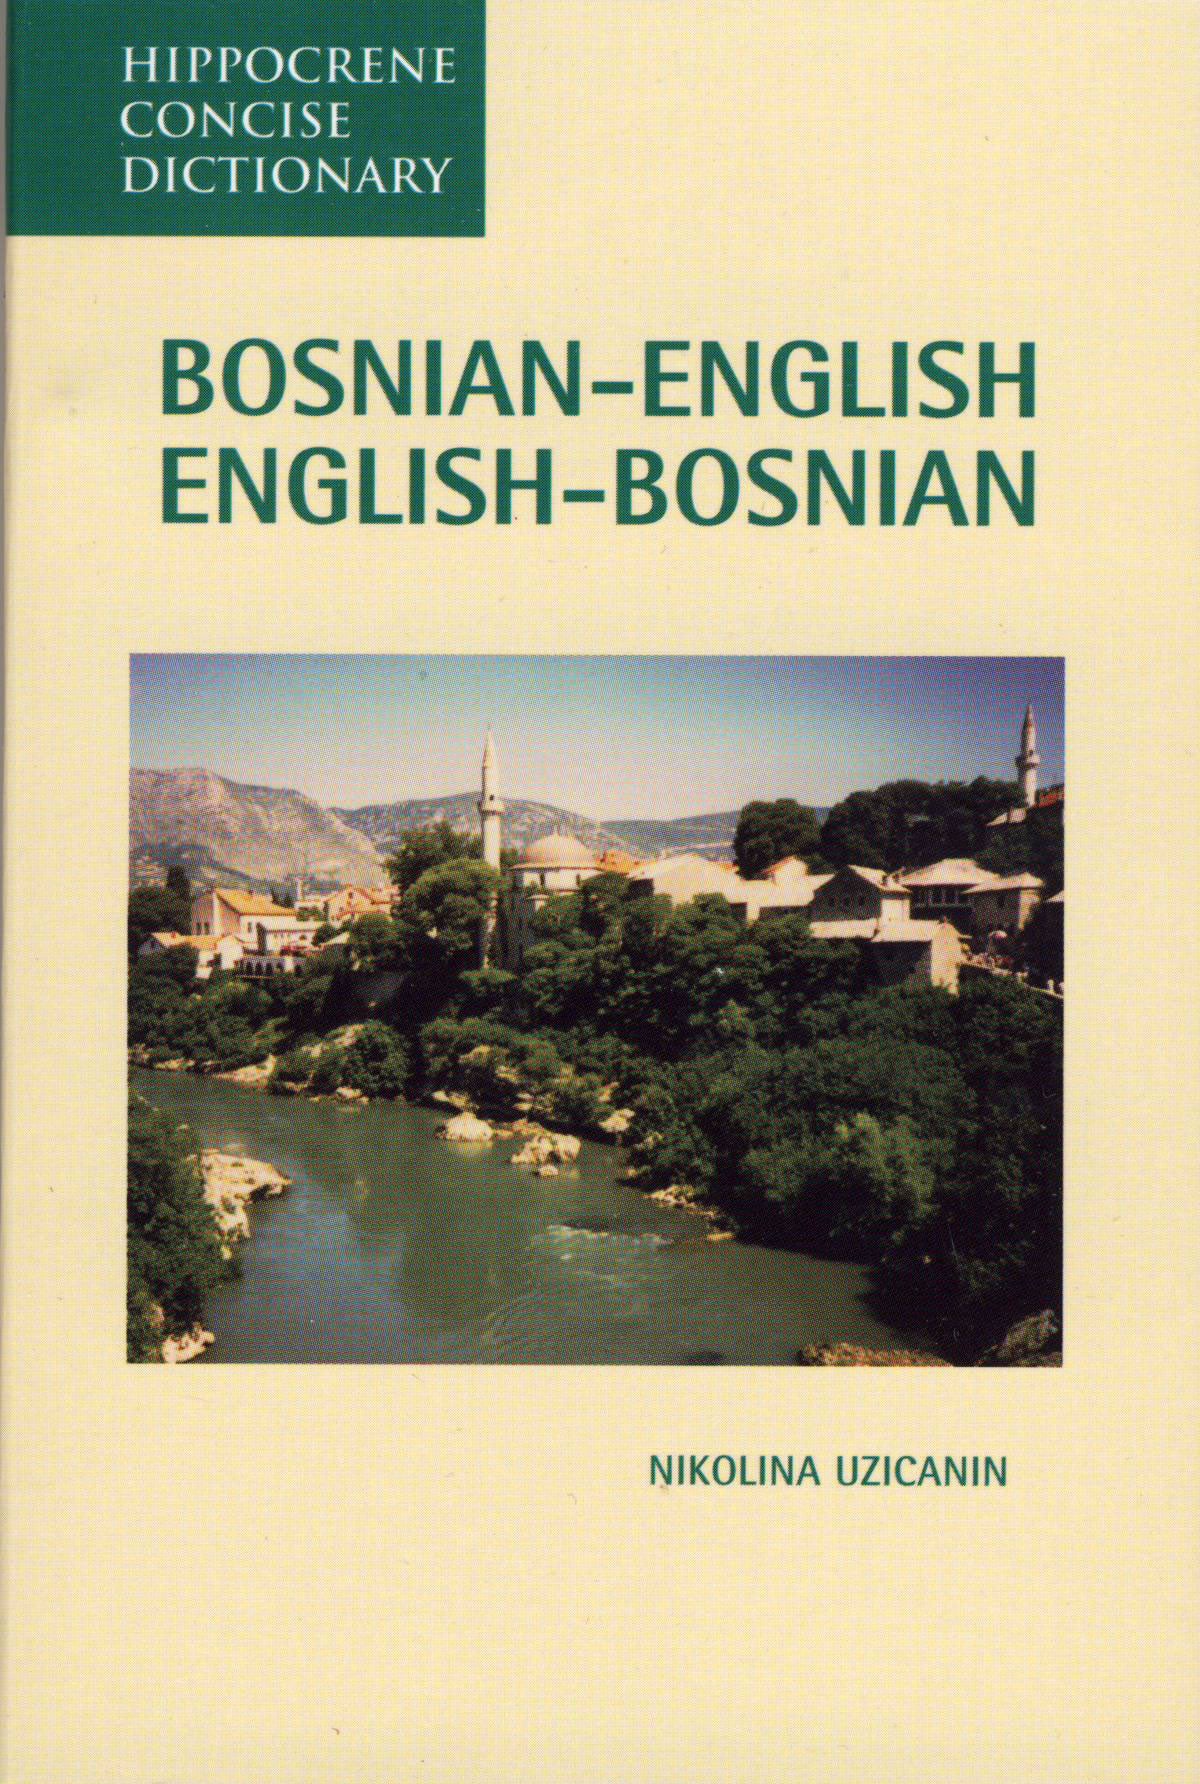 Bosnian-English / English-Bosnian Hipp Consice Dictionary